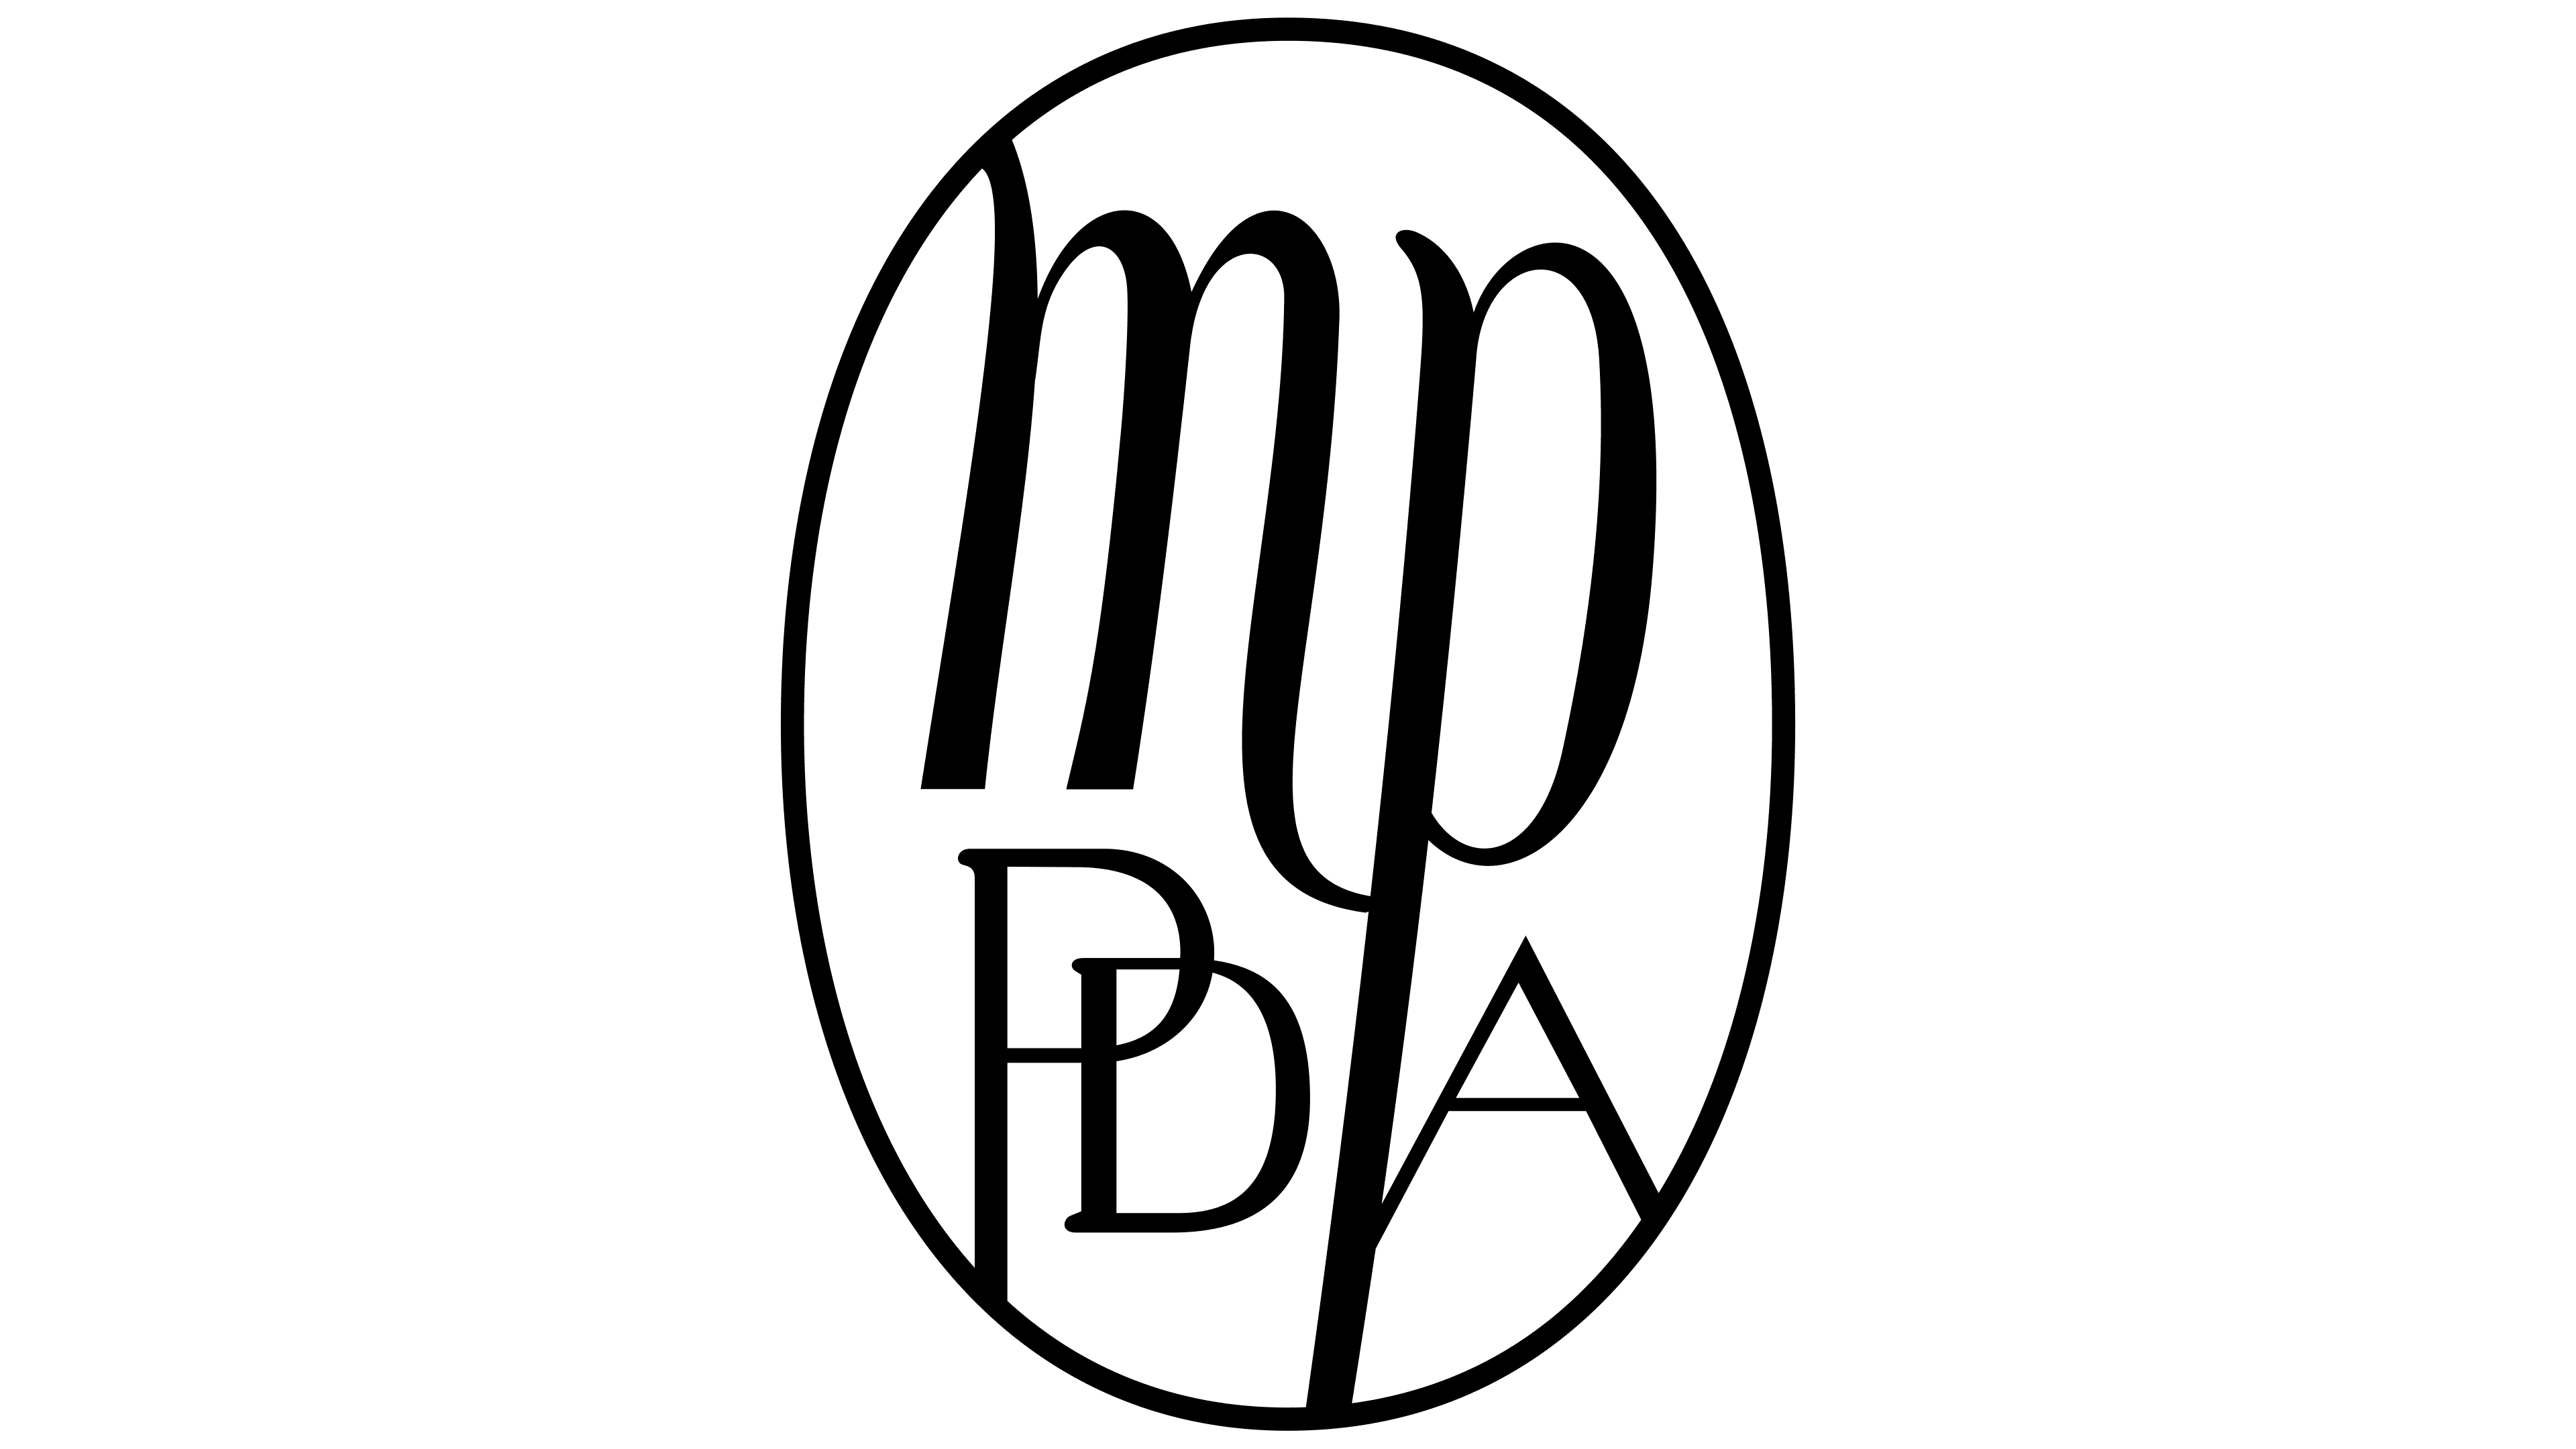 mpaa logo png